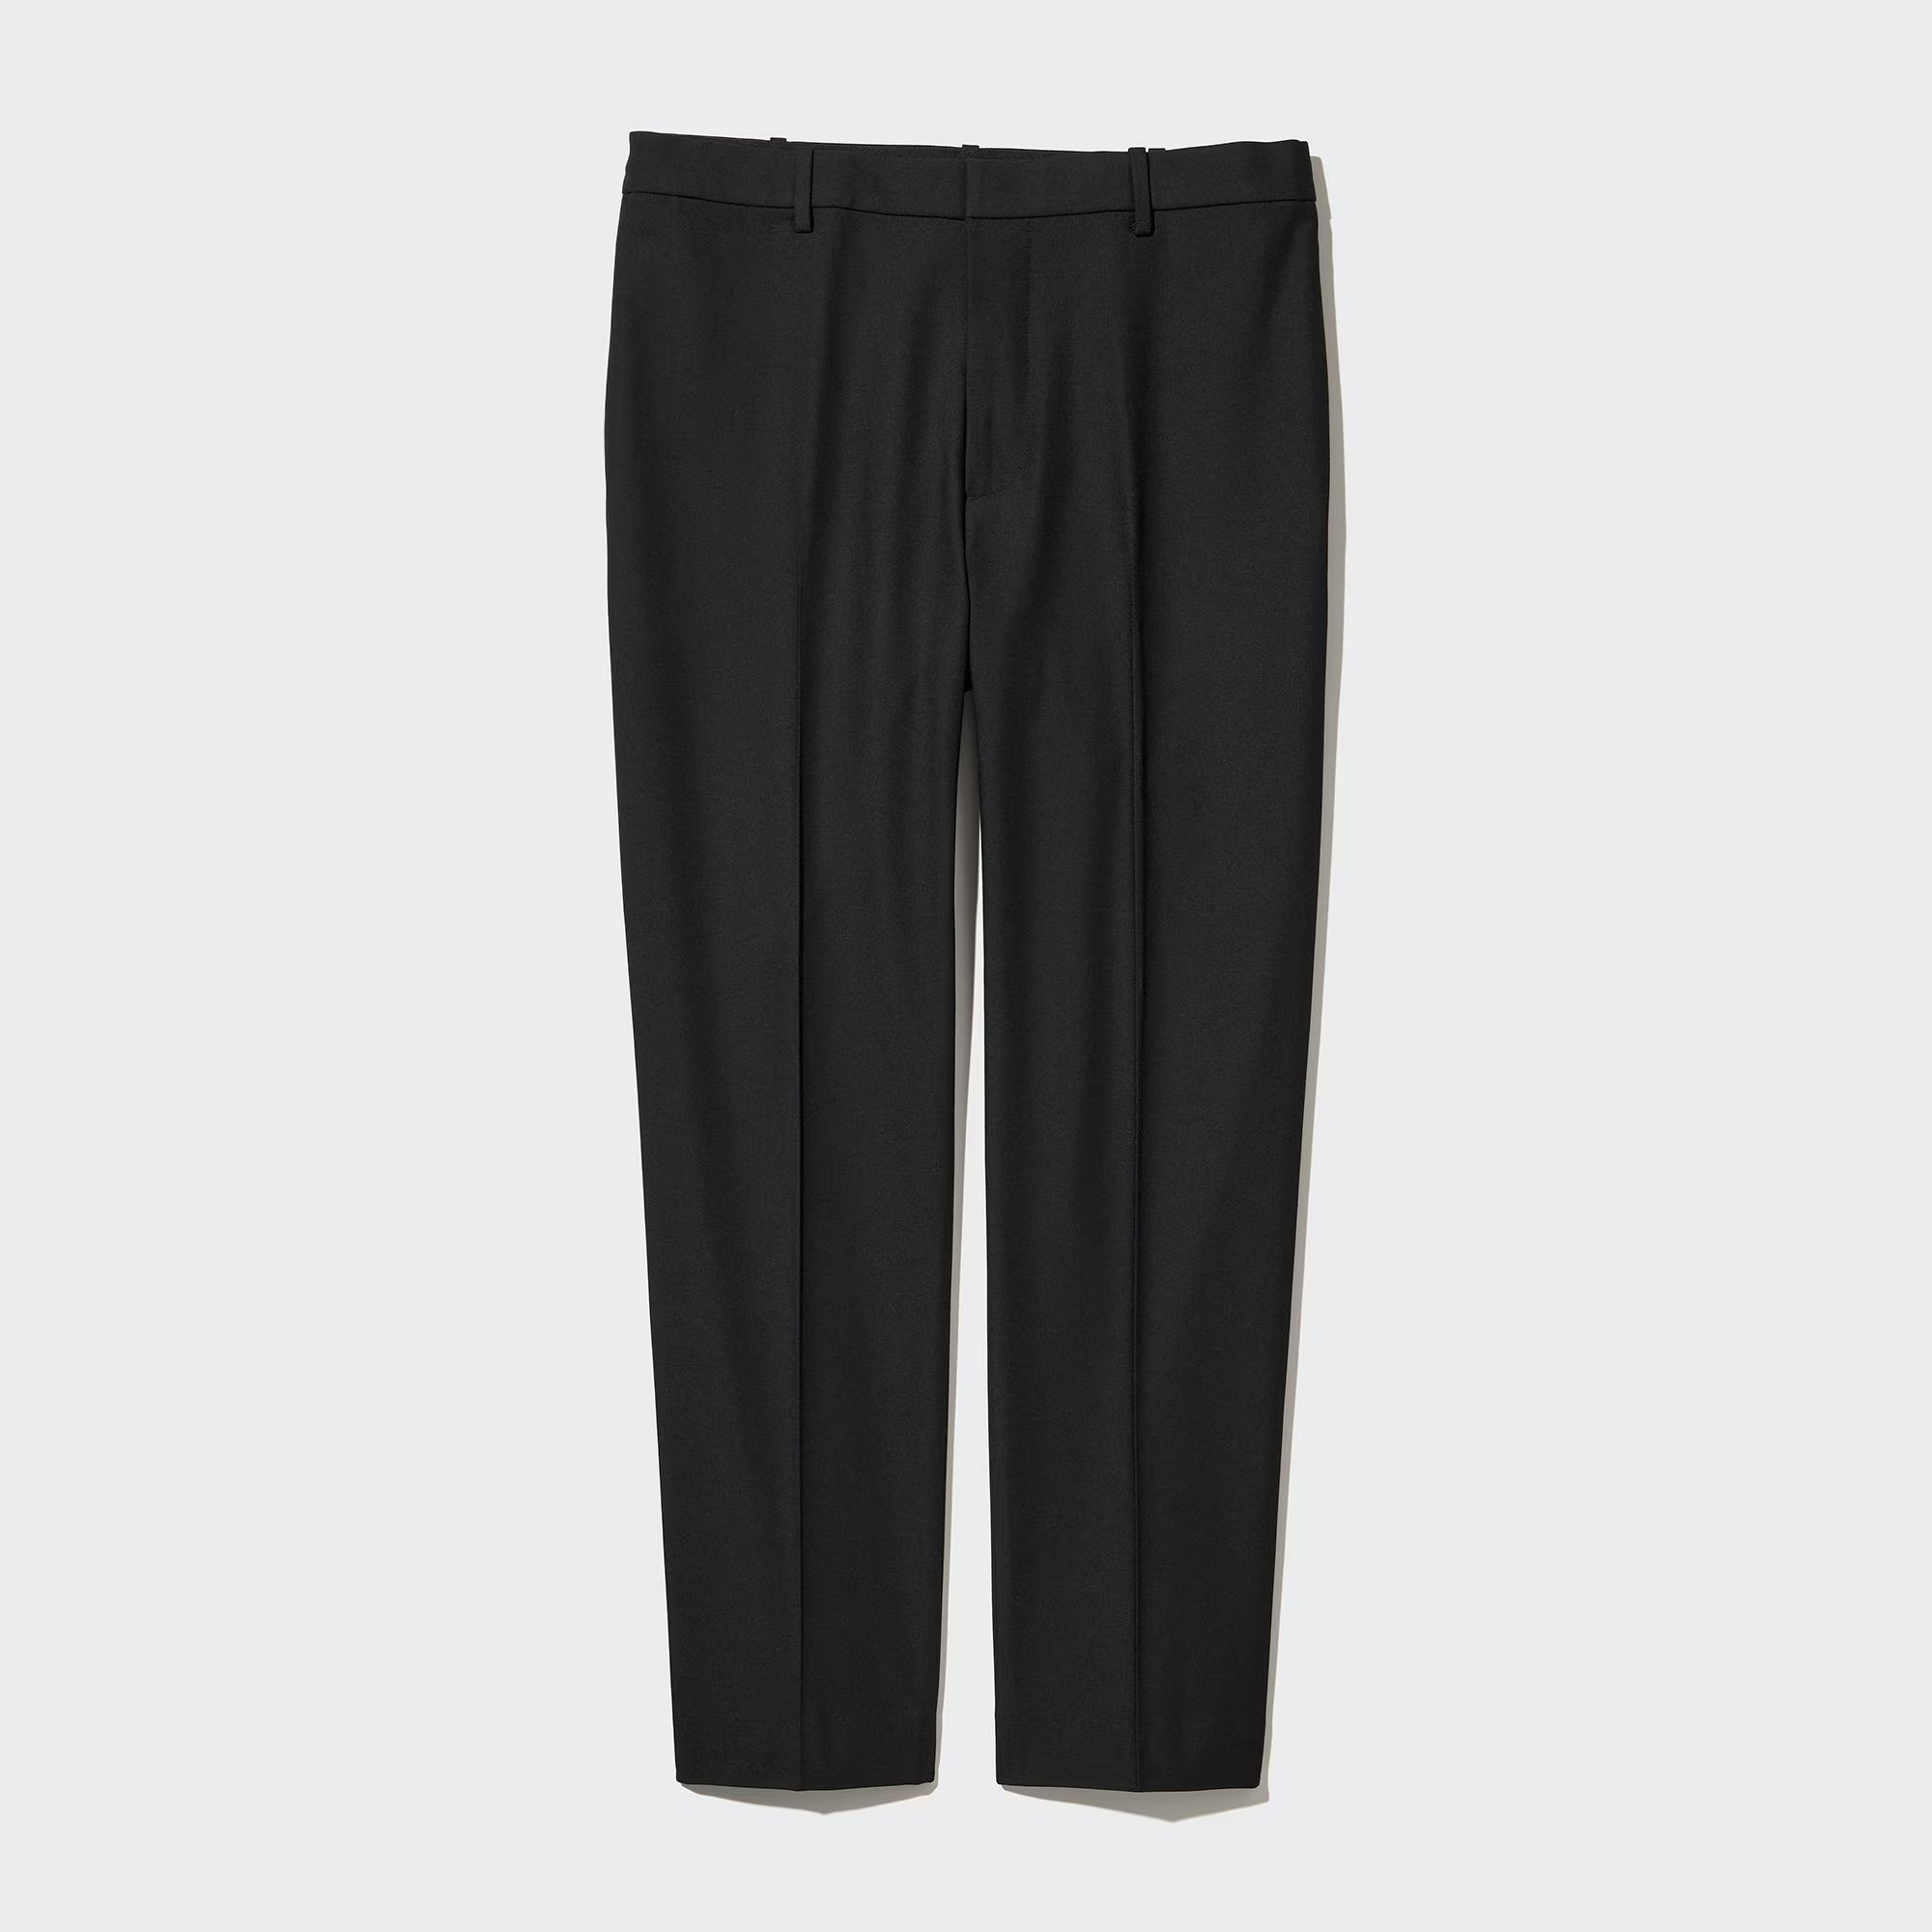 Брюки Uniqlo Smart Wool-Like Ankle Length, черный брюки uniqlo smart comfort glen checked ankle length серый